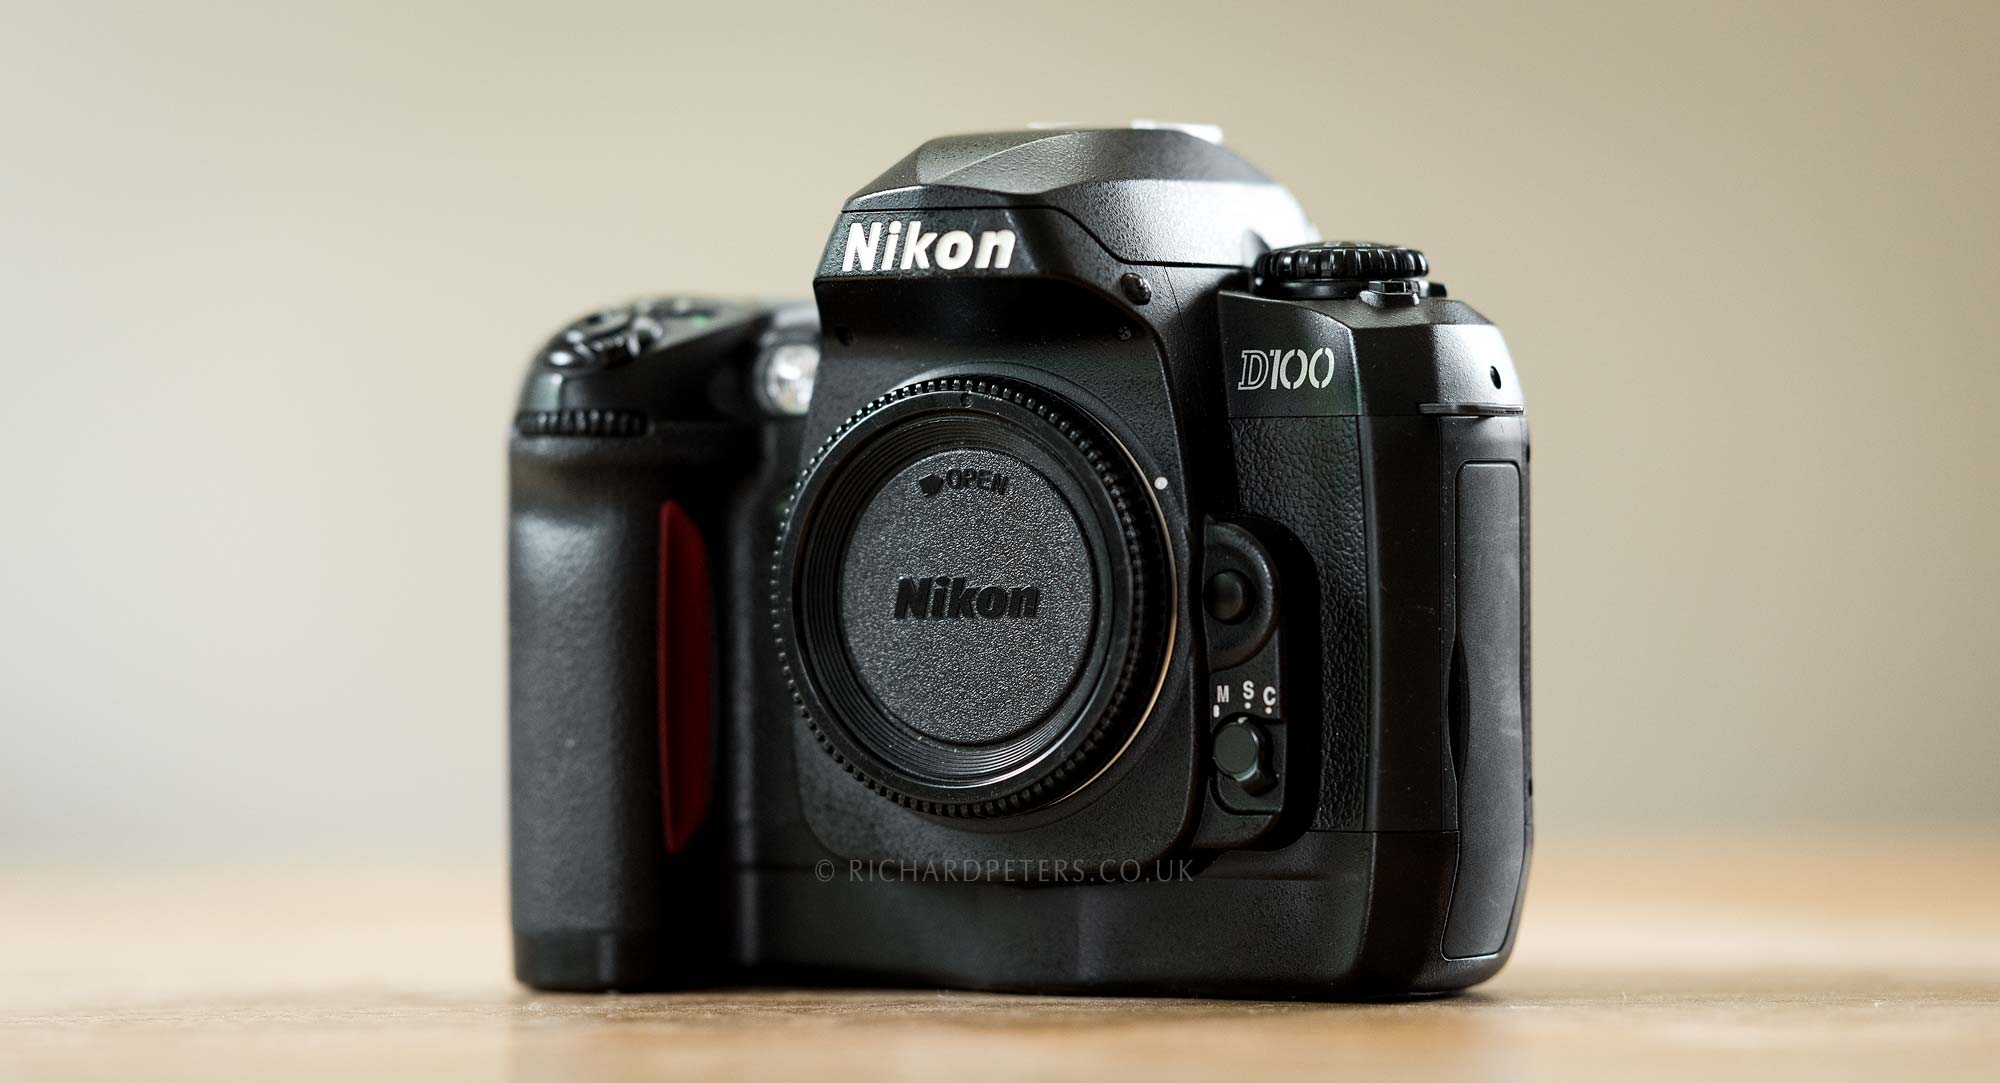 The Nikon D100